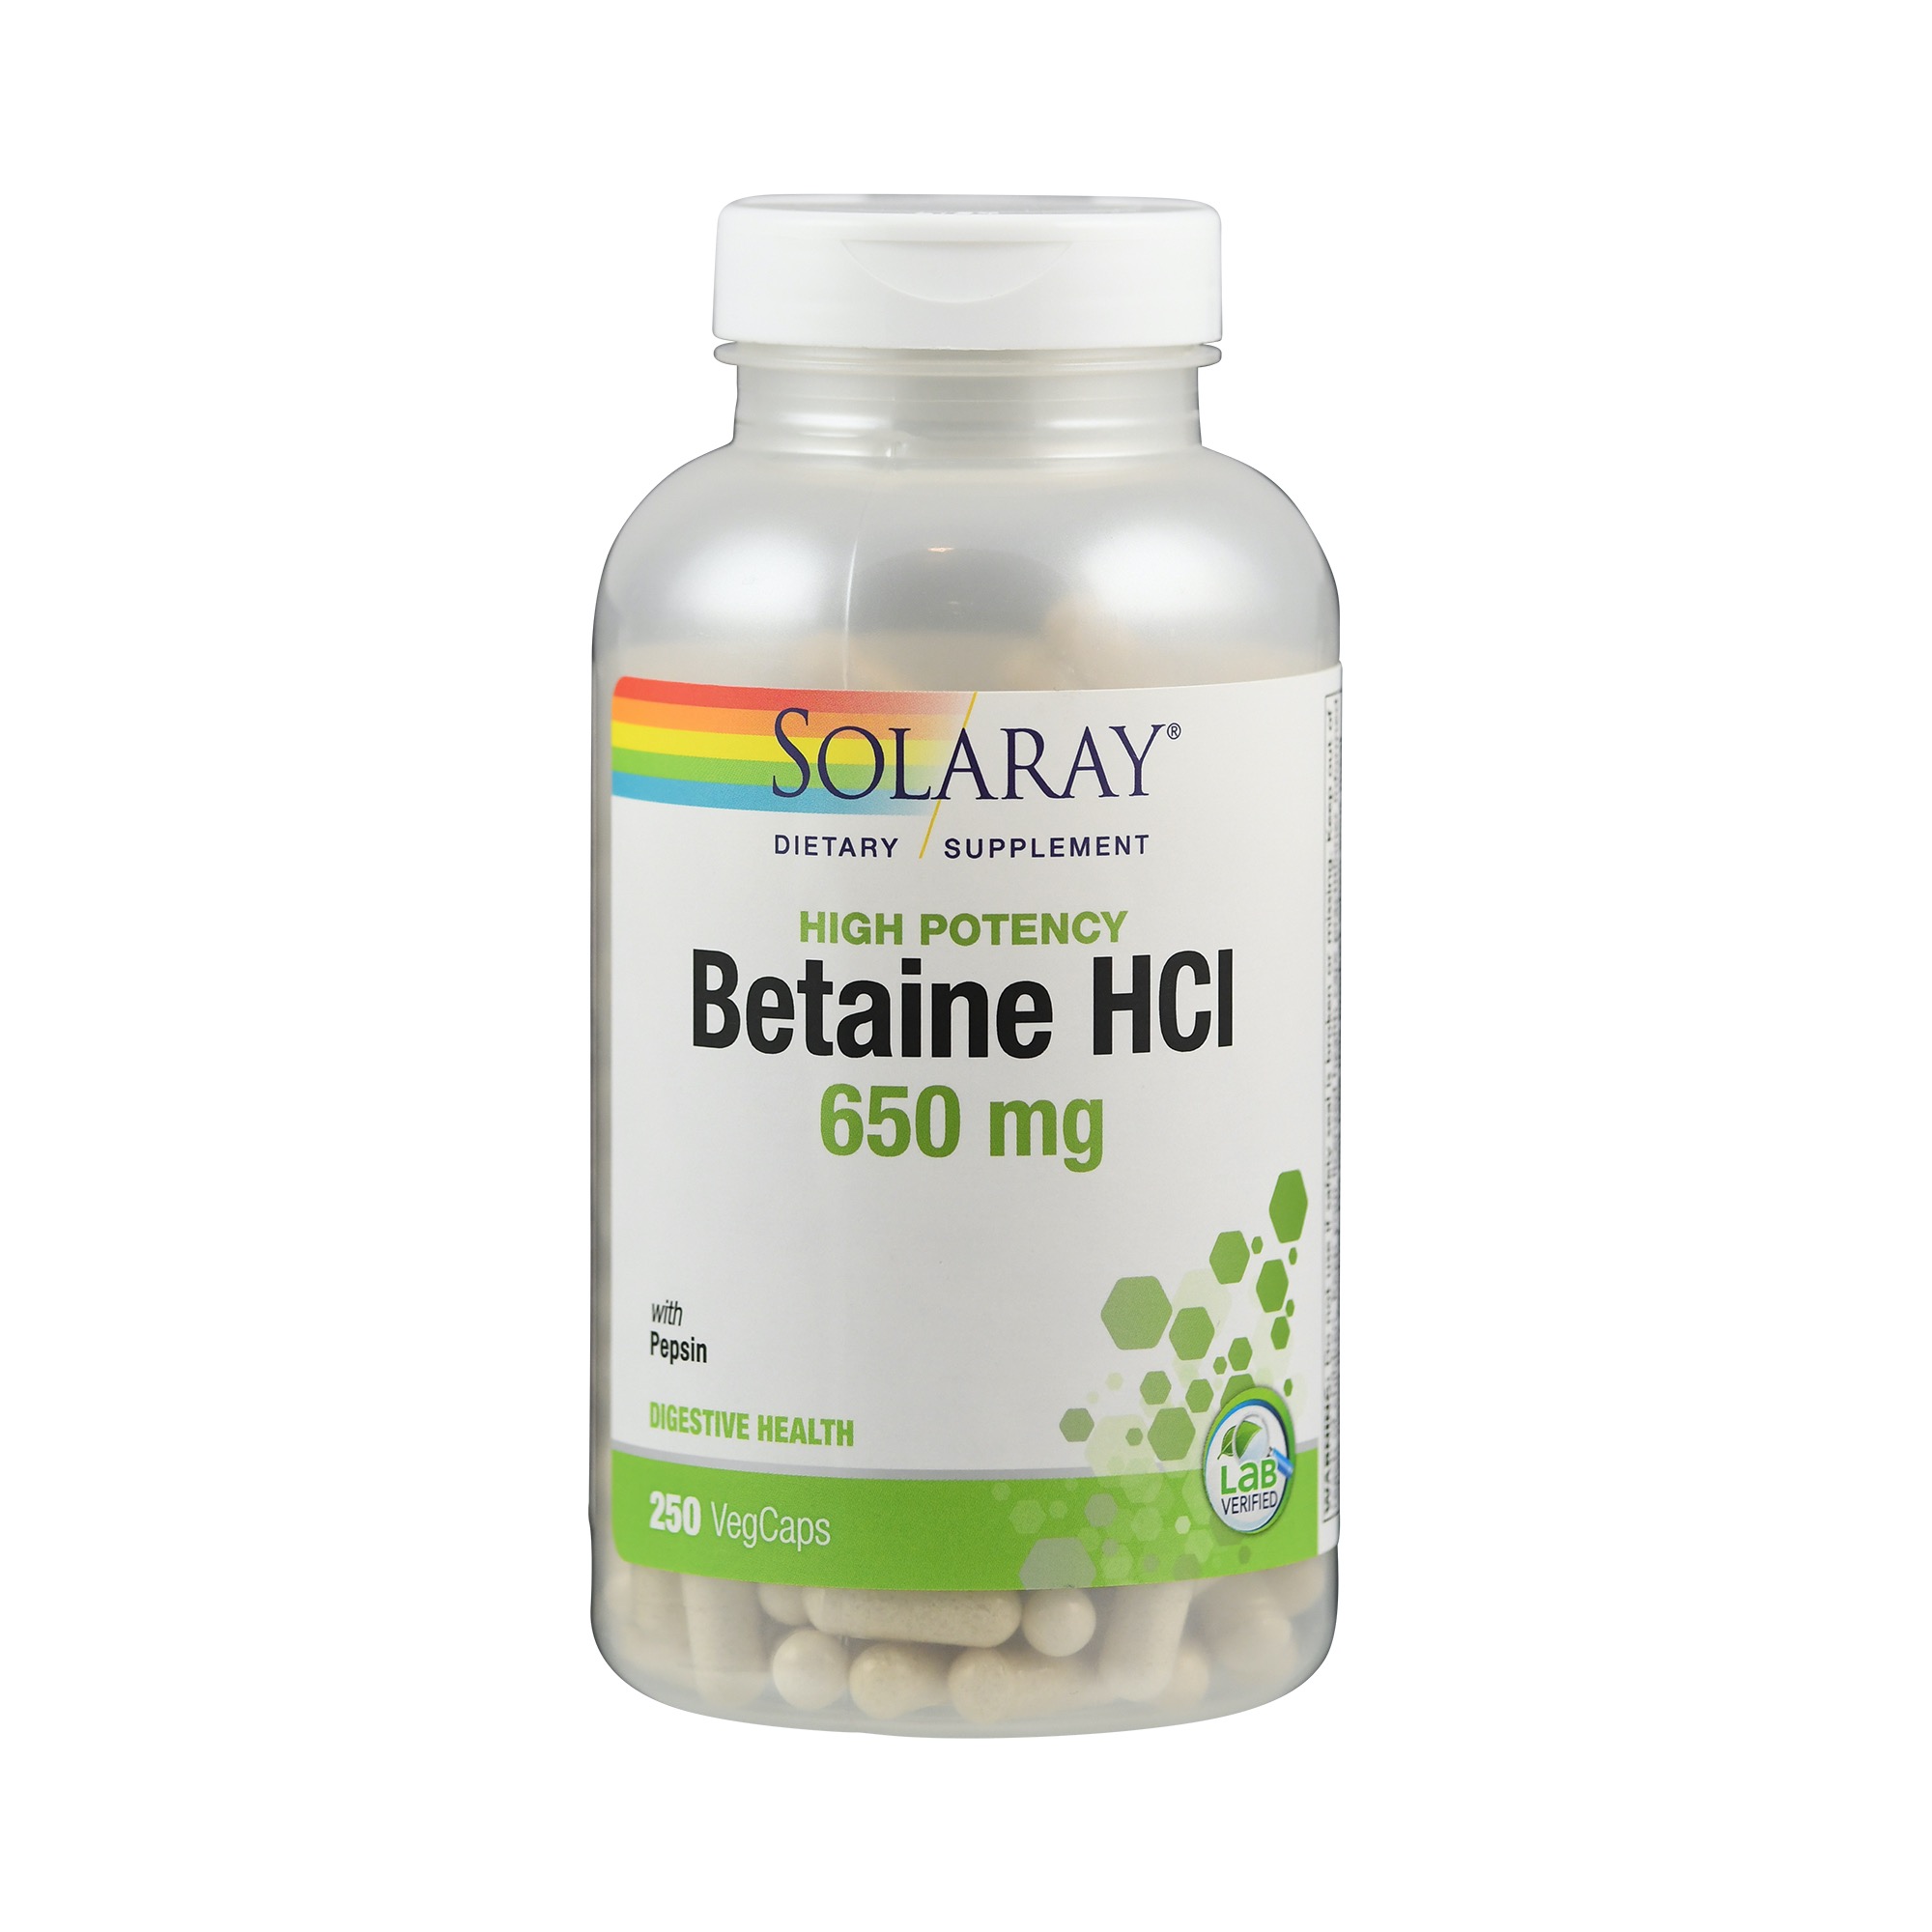 Betain HCl 650 mg + Pepsin, High Potency von Solaray.